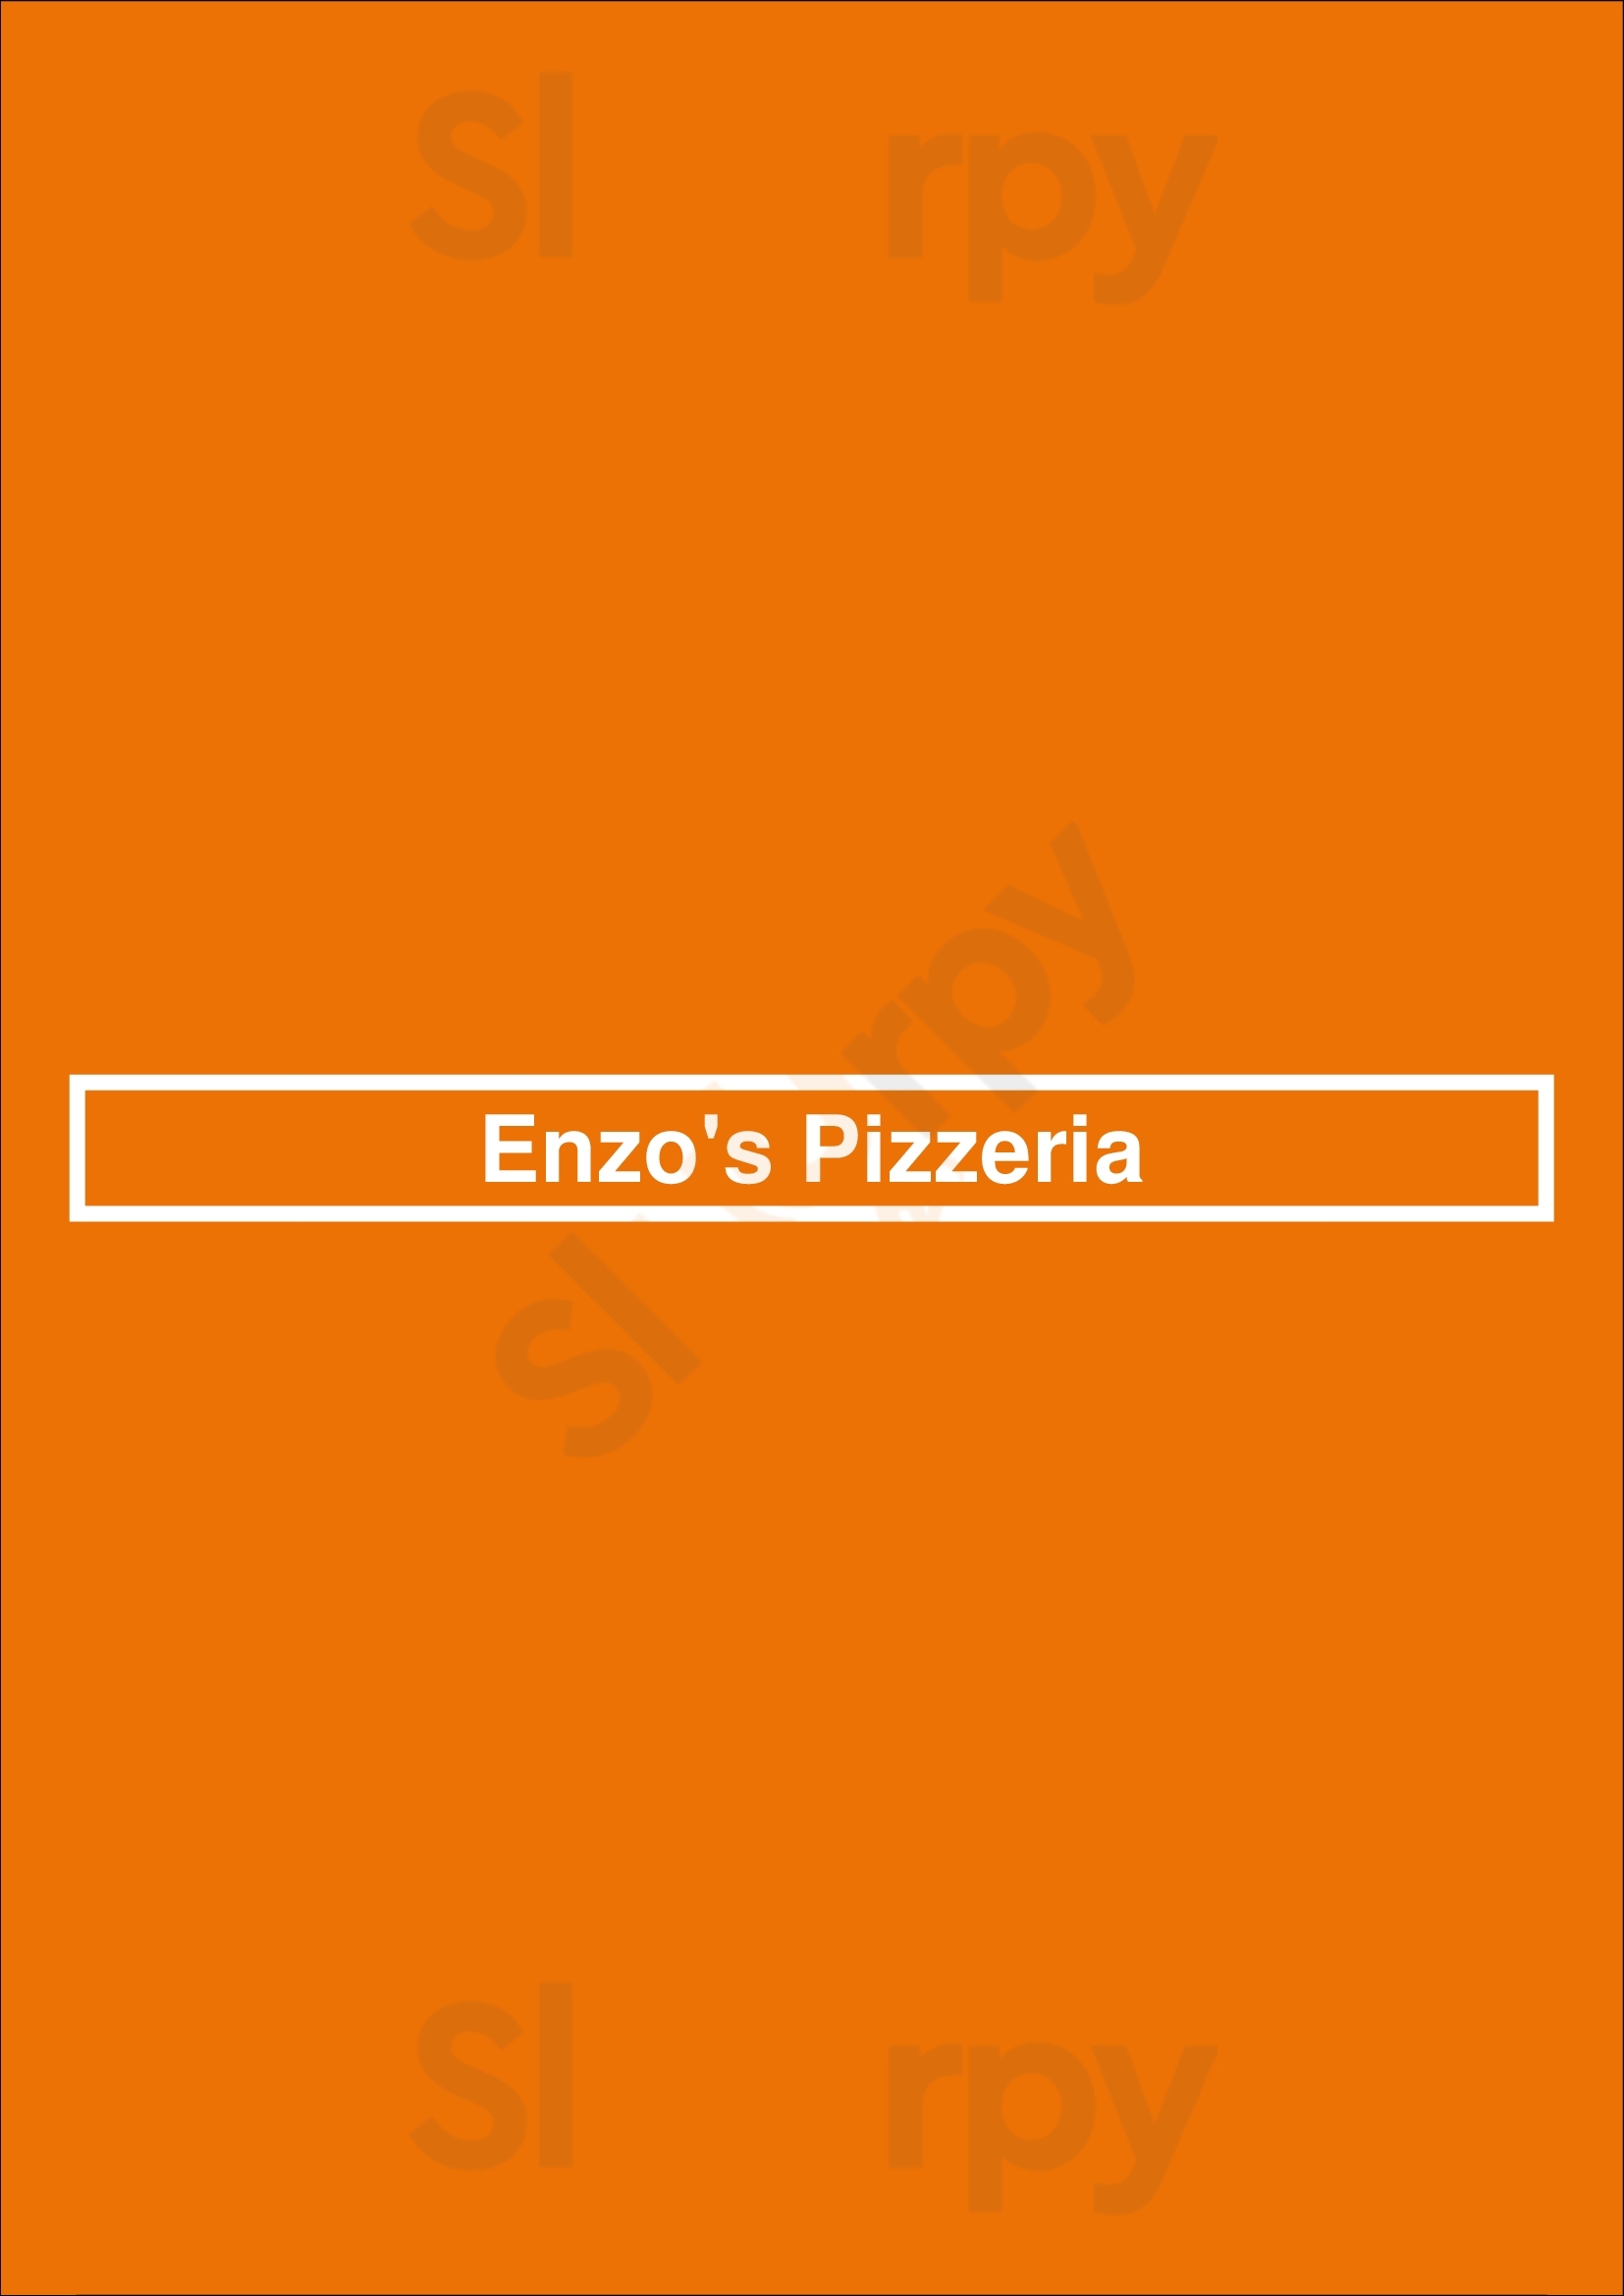 Enzo's Pizzeria Los Angeles Menu - 1